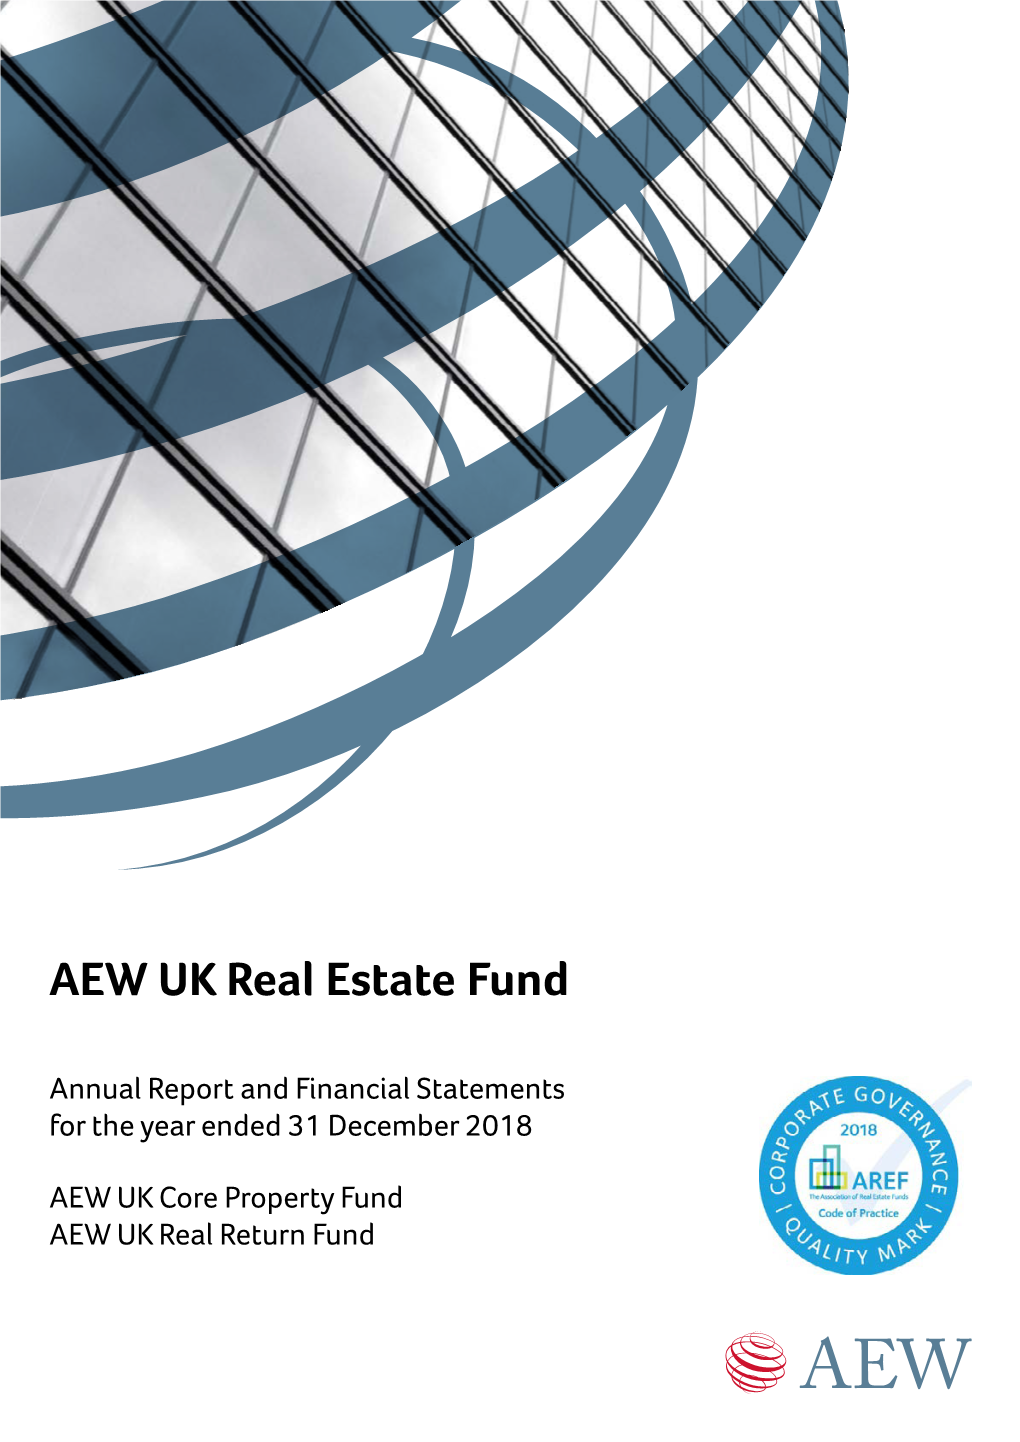 AEW UK Real Estate Fund